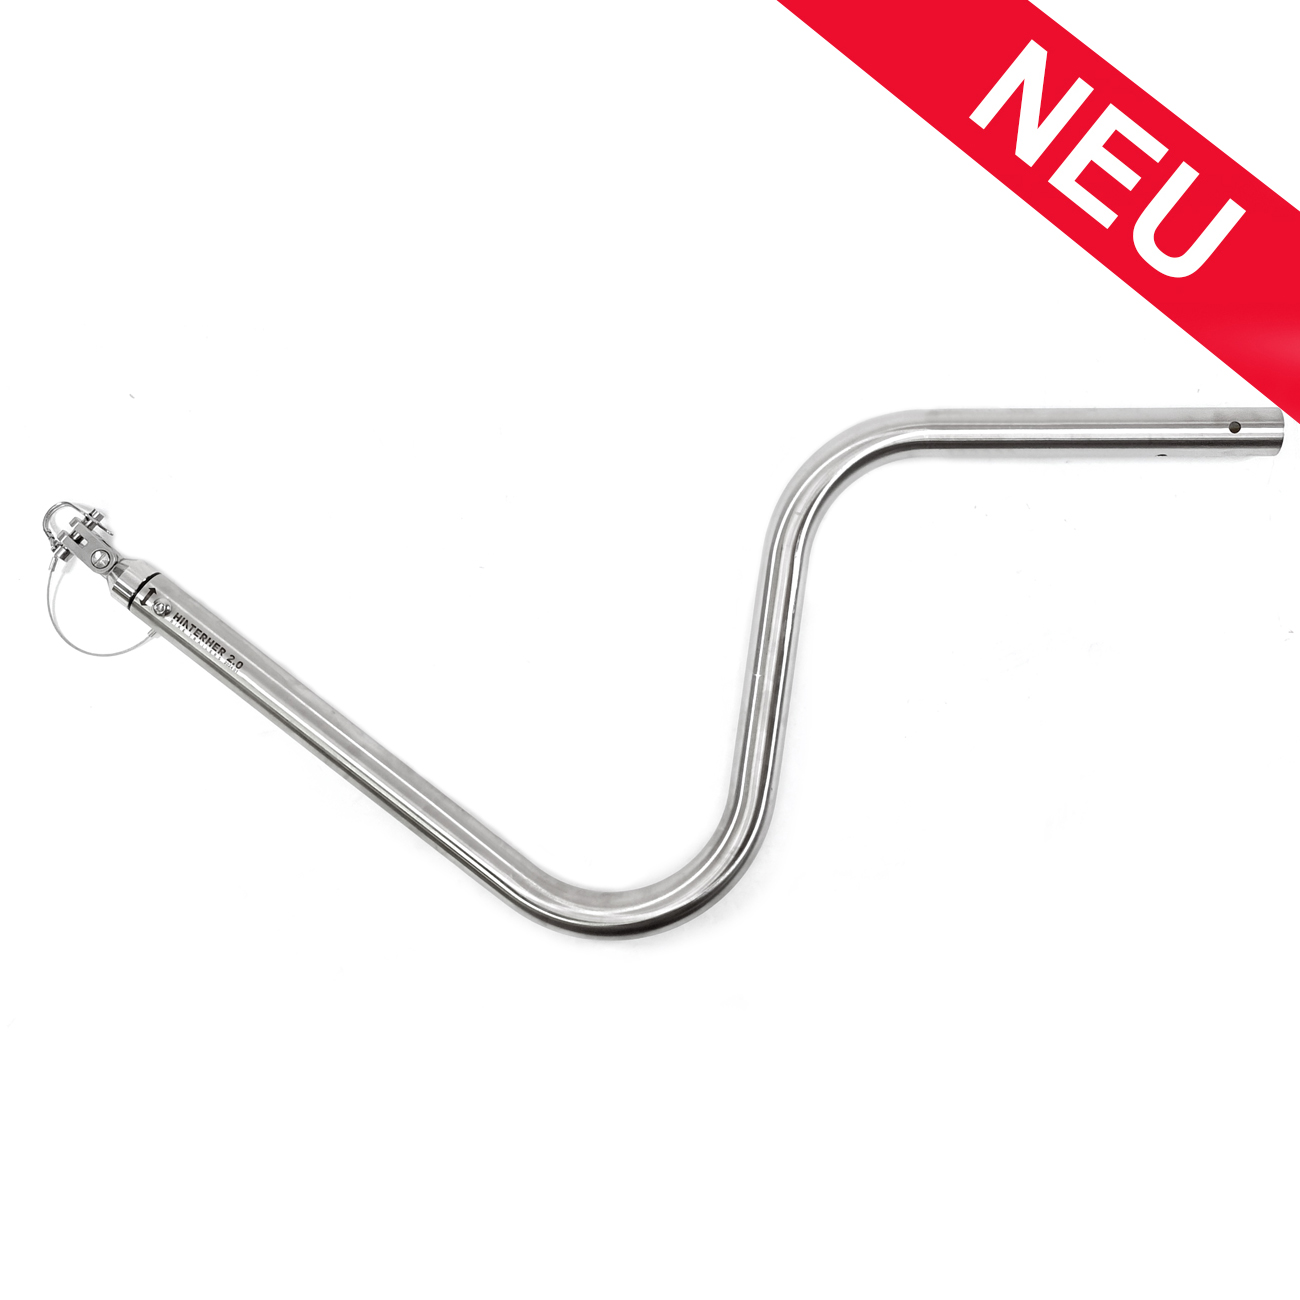 SL-stainless-steel-drawbar (Hinterher system)